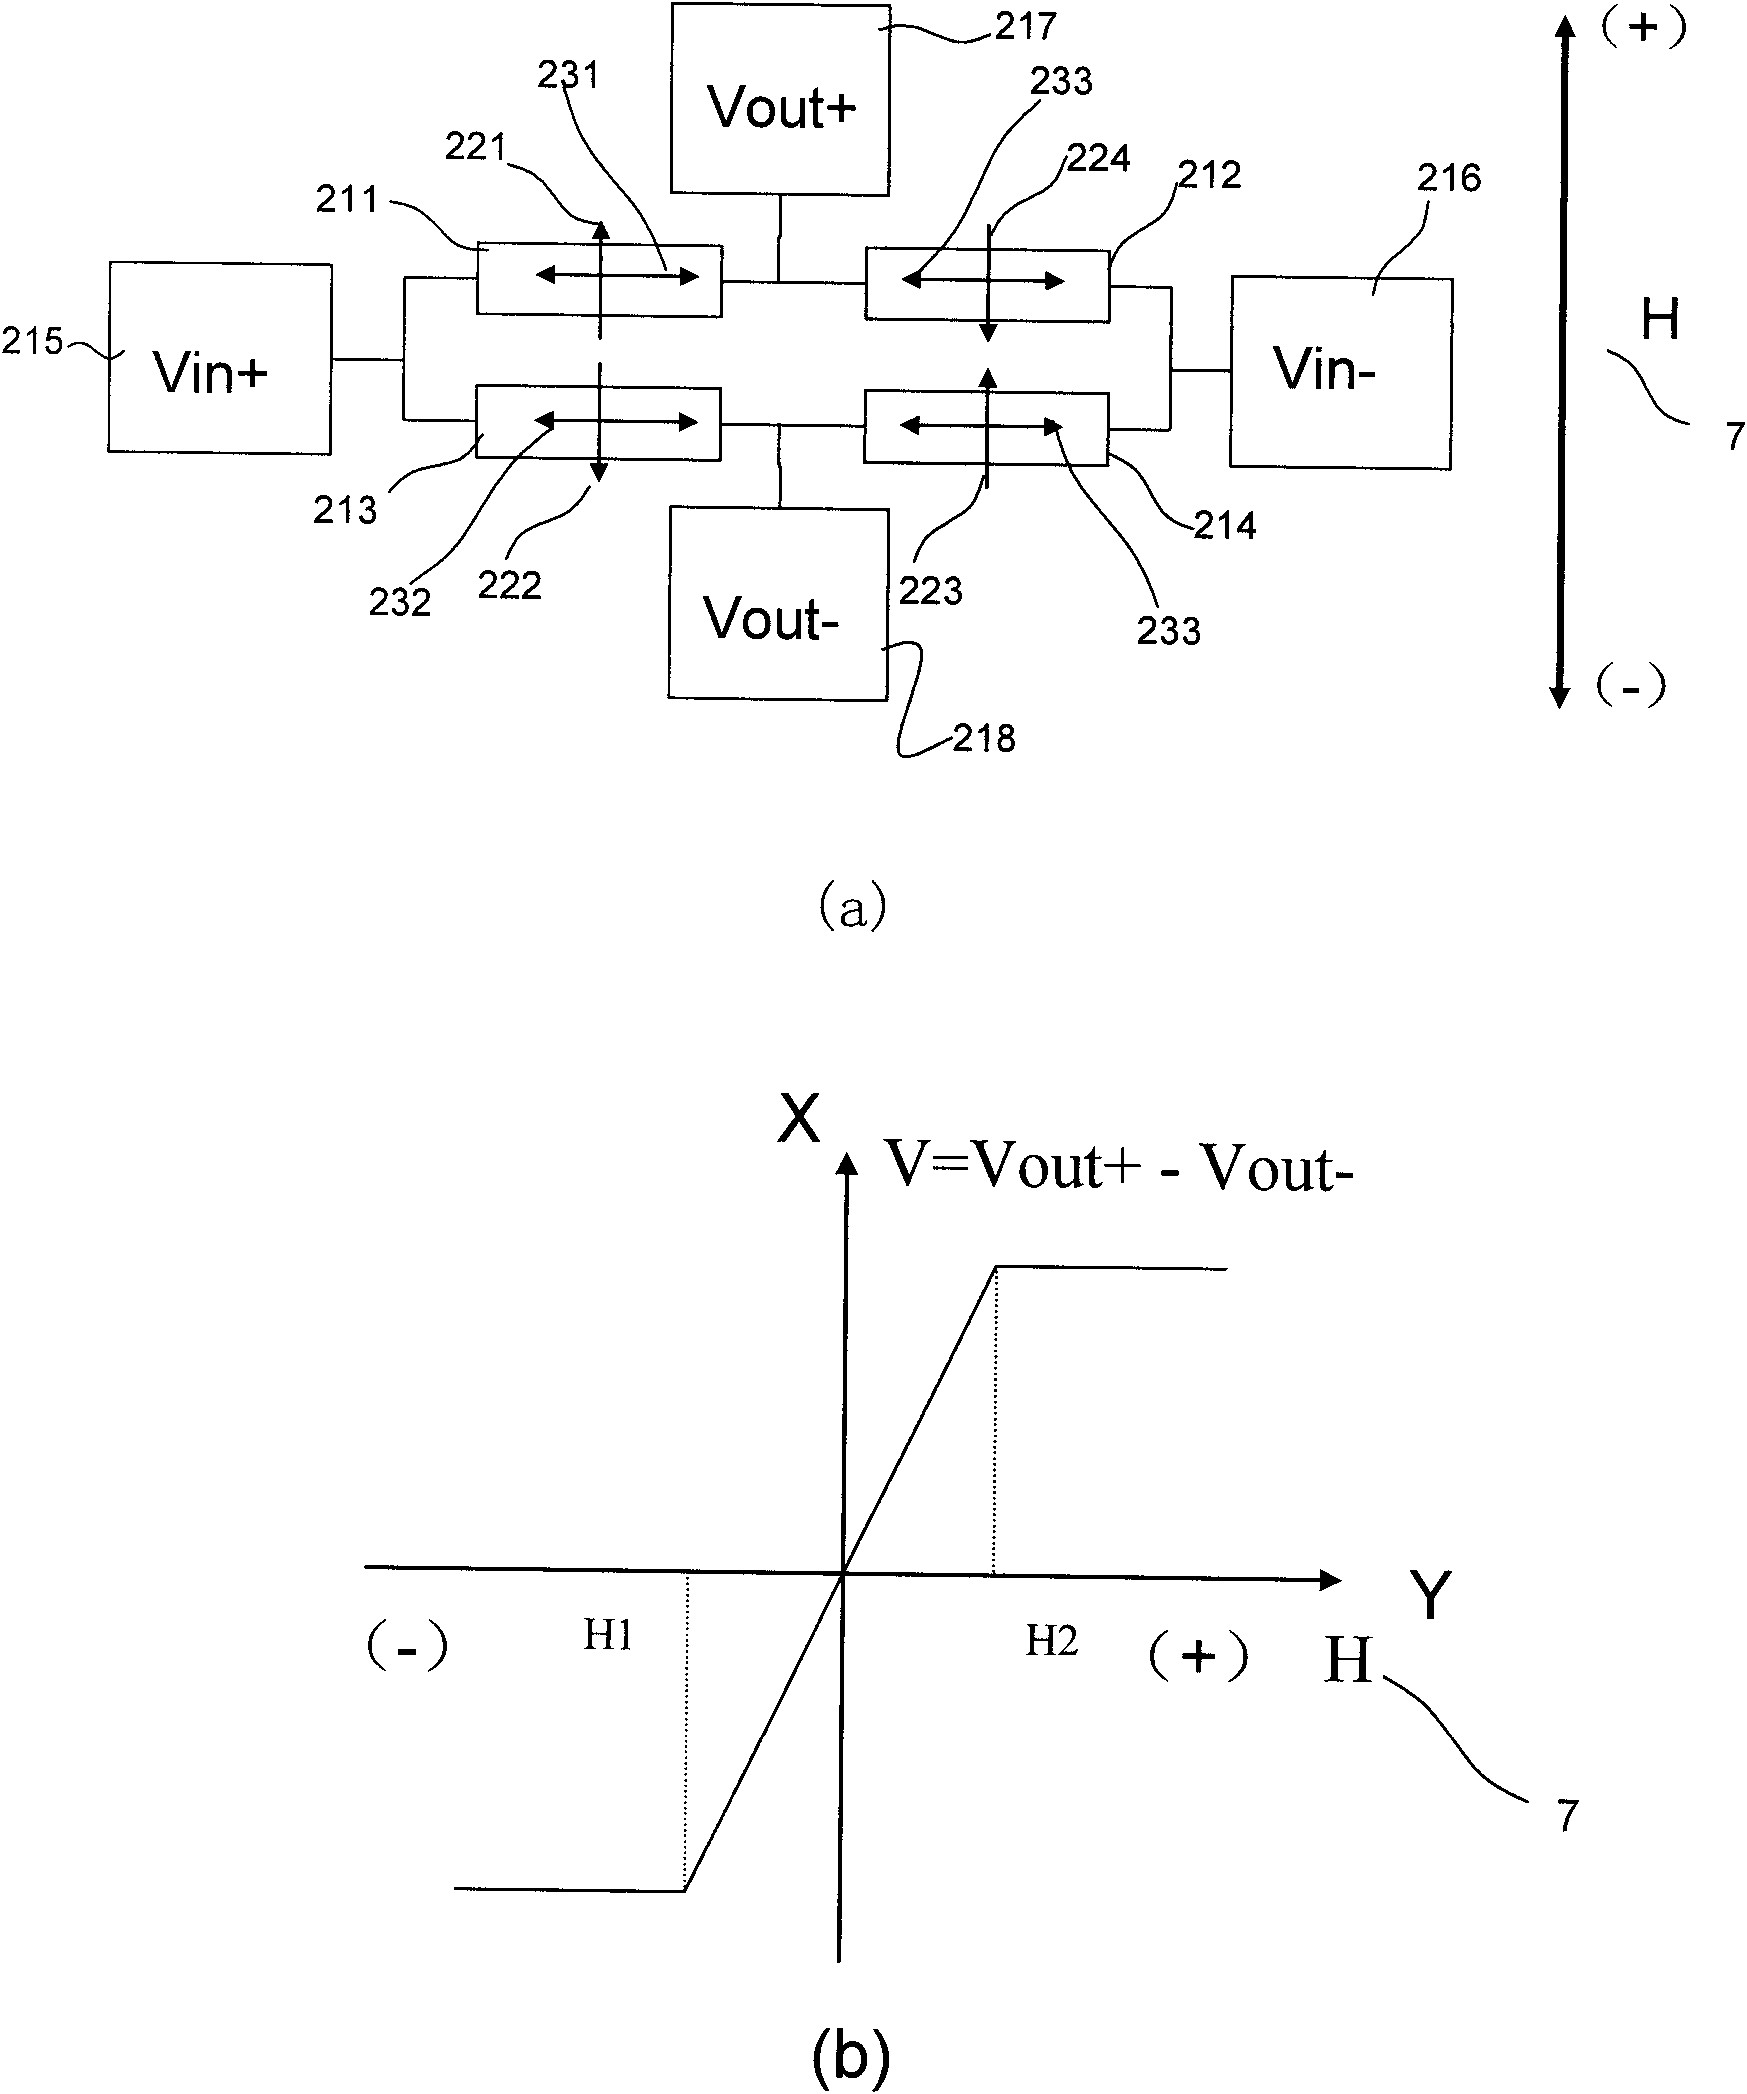 TMR (Triple Modular Redundancy) electronic compass